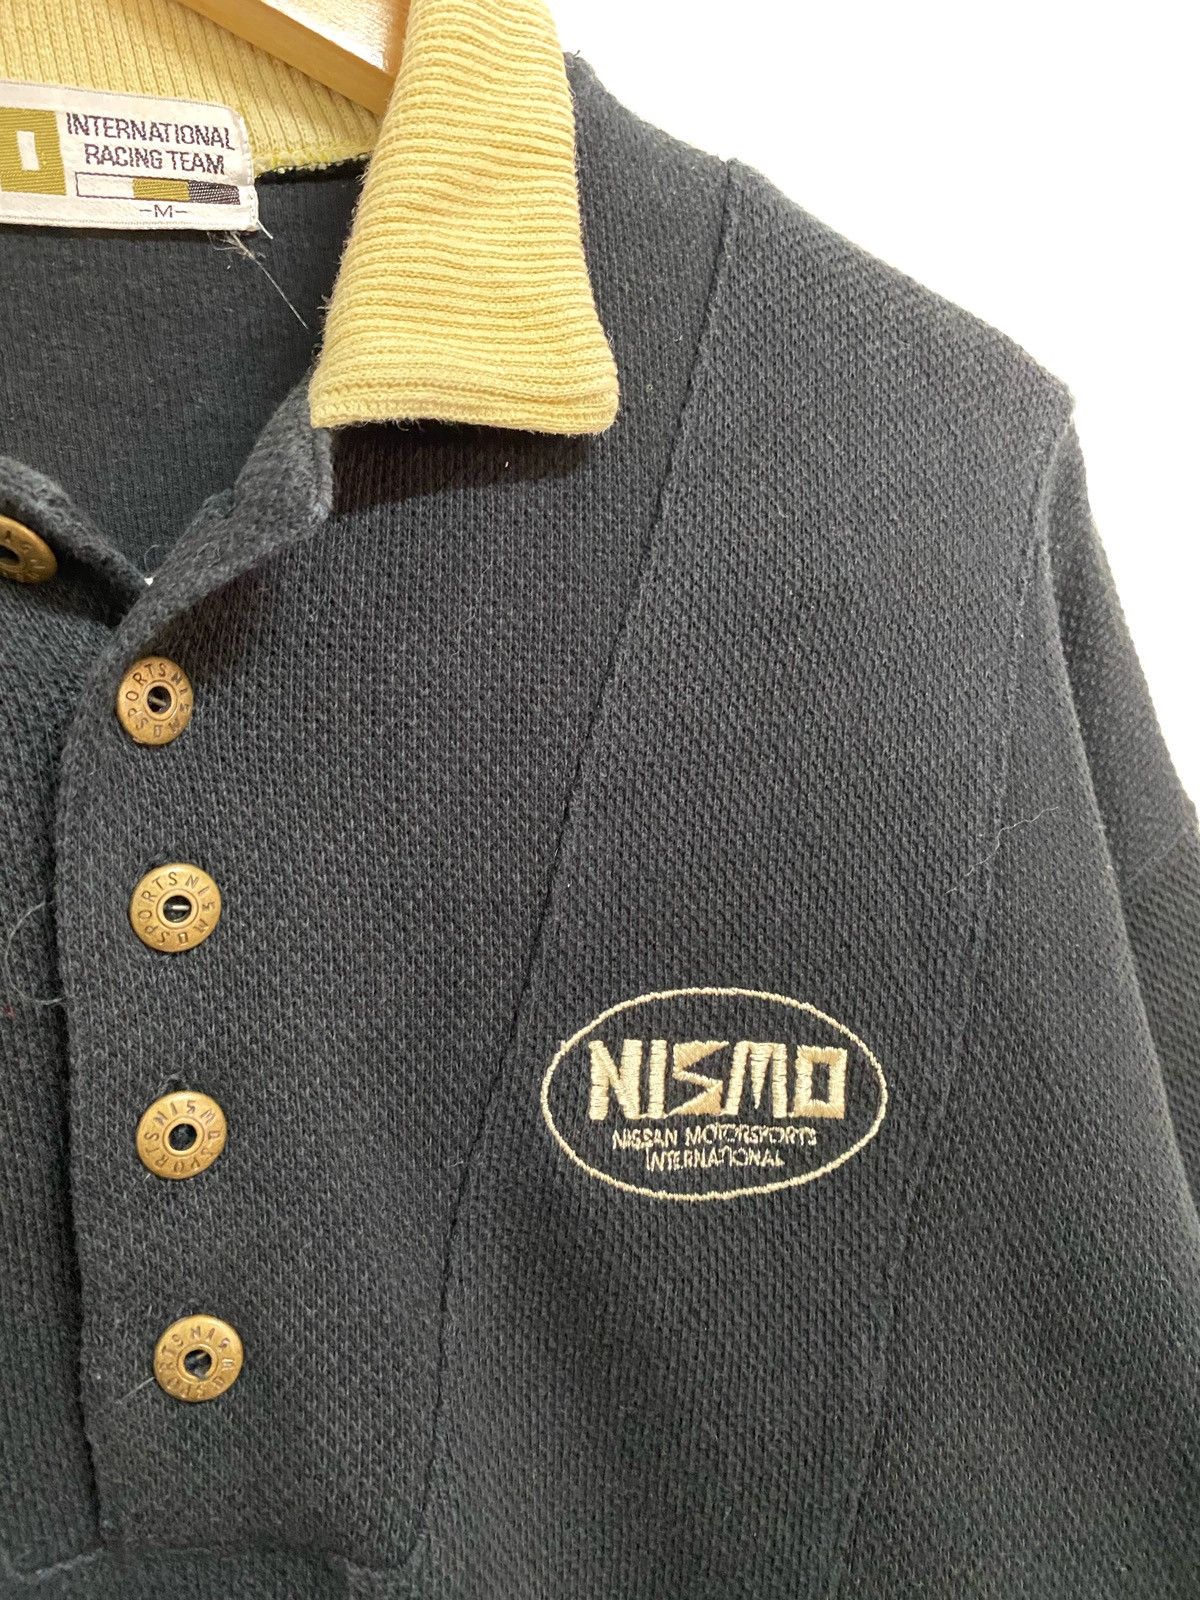 Vintage NISMO Nissan Racing Team Embroidery - 4